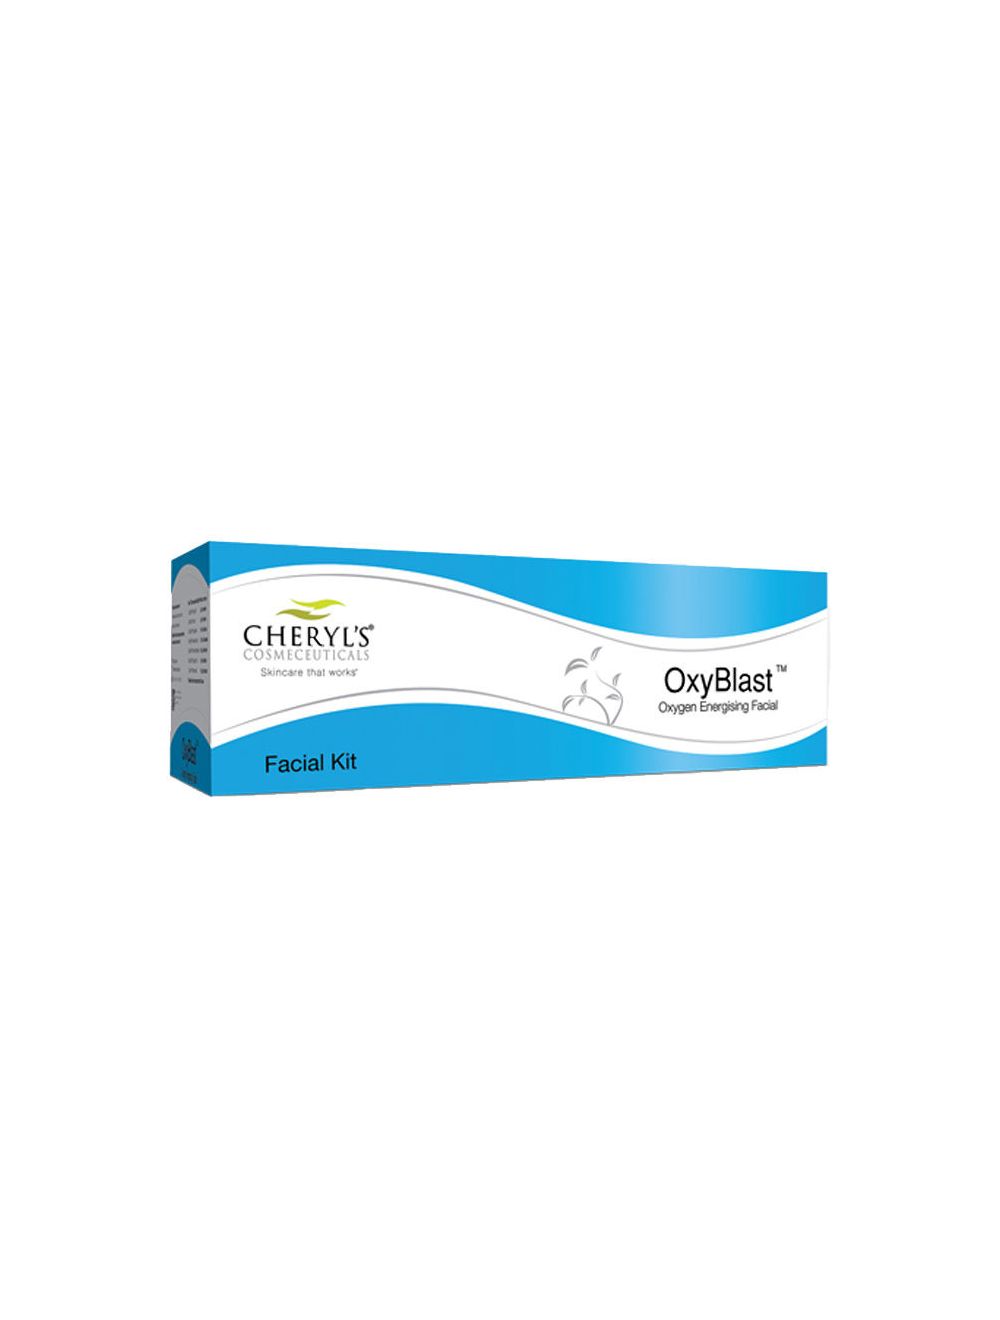 Cheryl's OxyBlast Oxygen Energizing Facial Kit (Pack of 10)